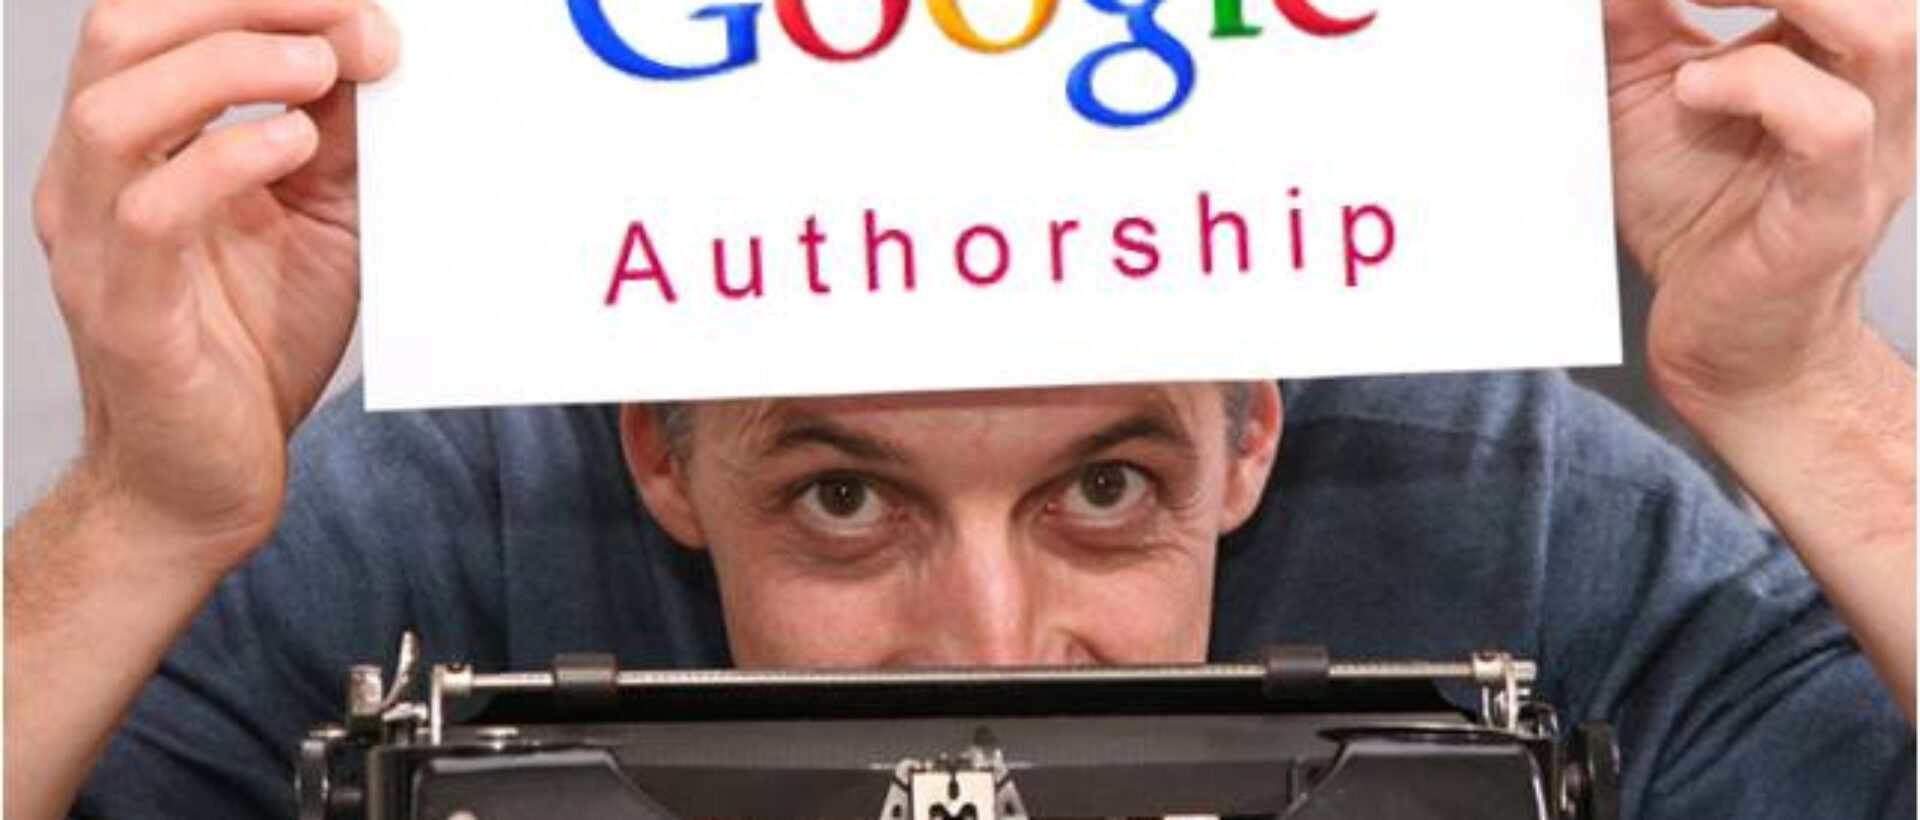 google-authorship-verifizierung